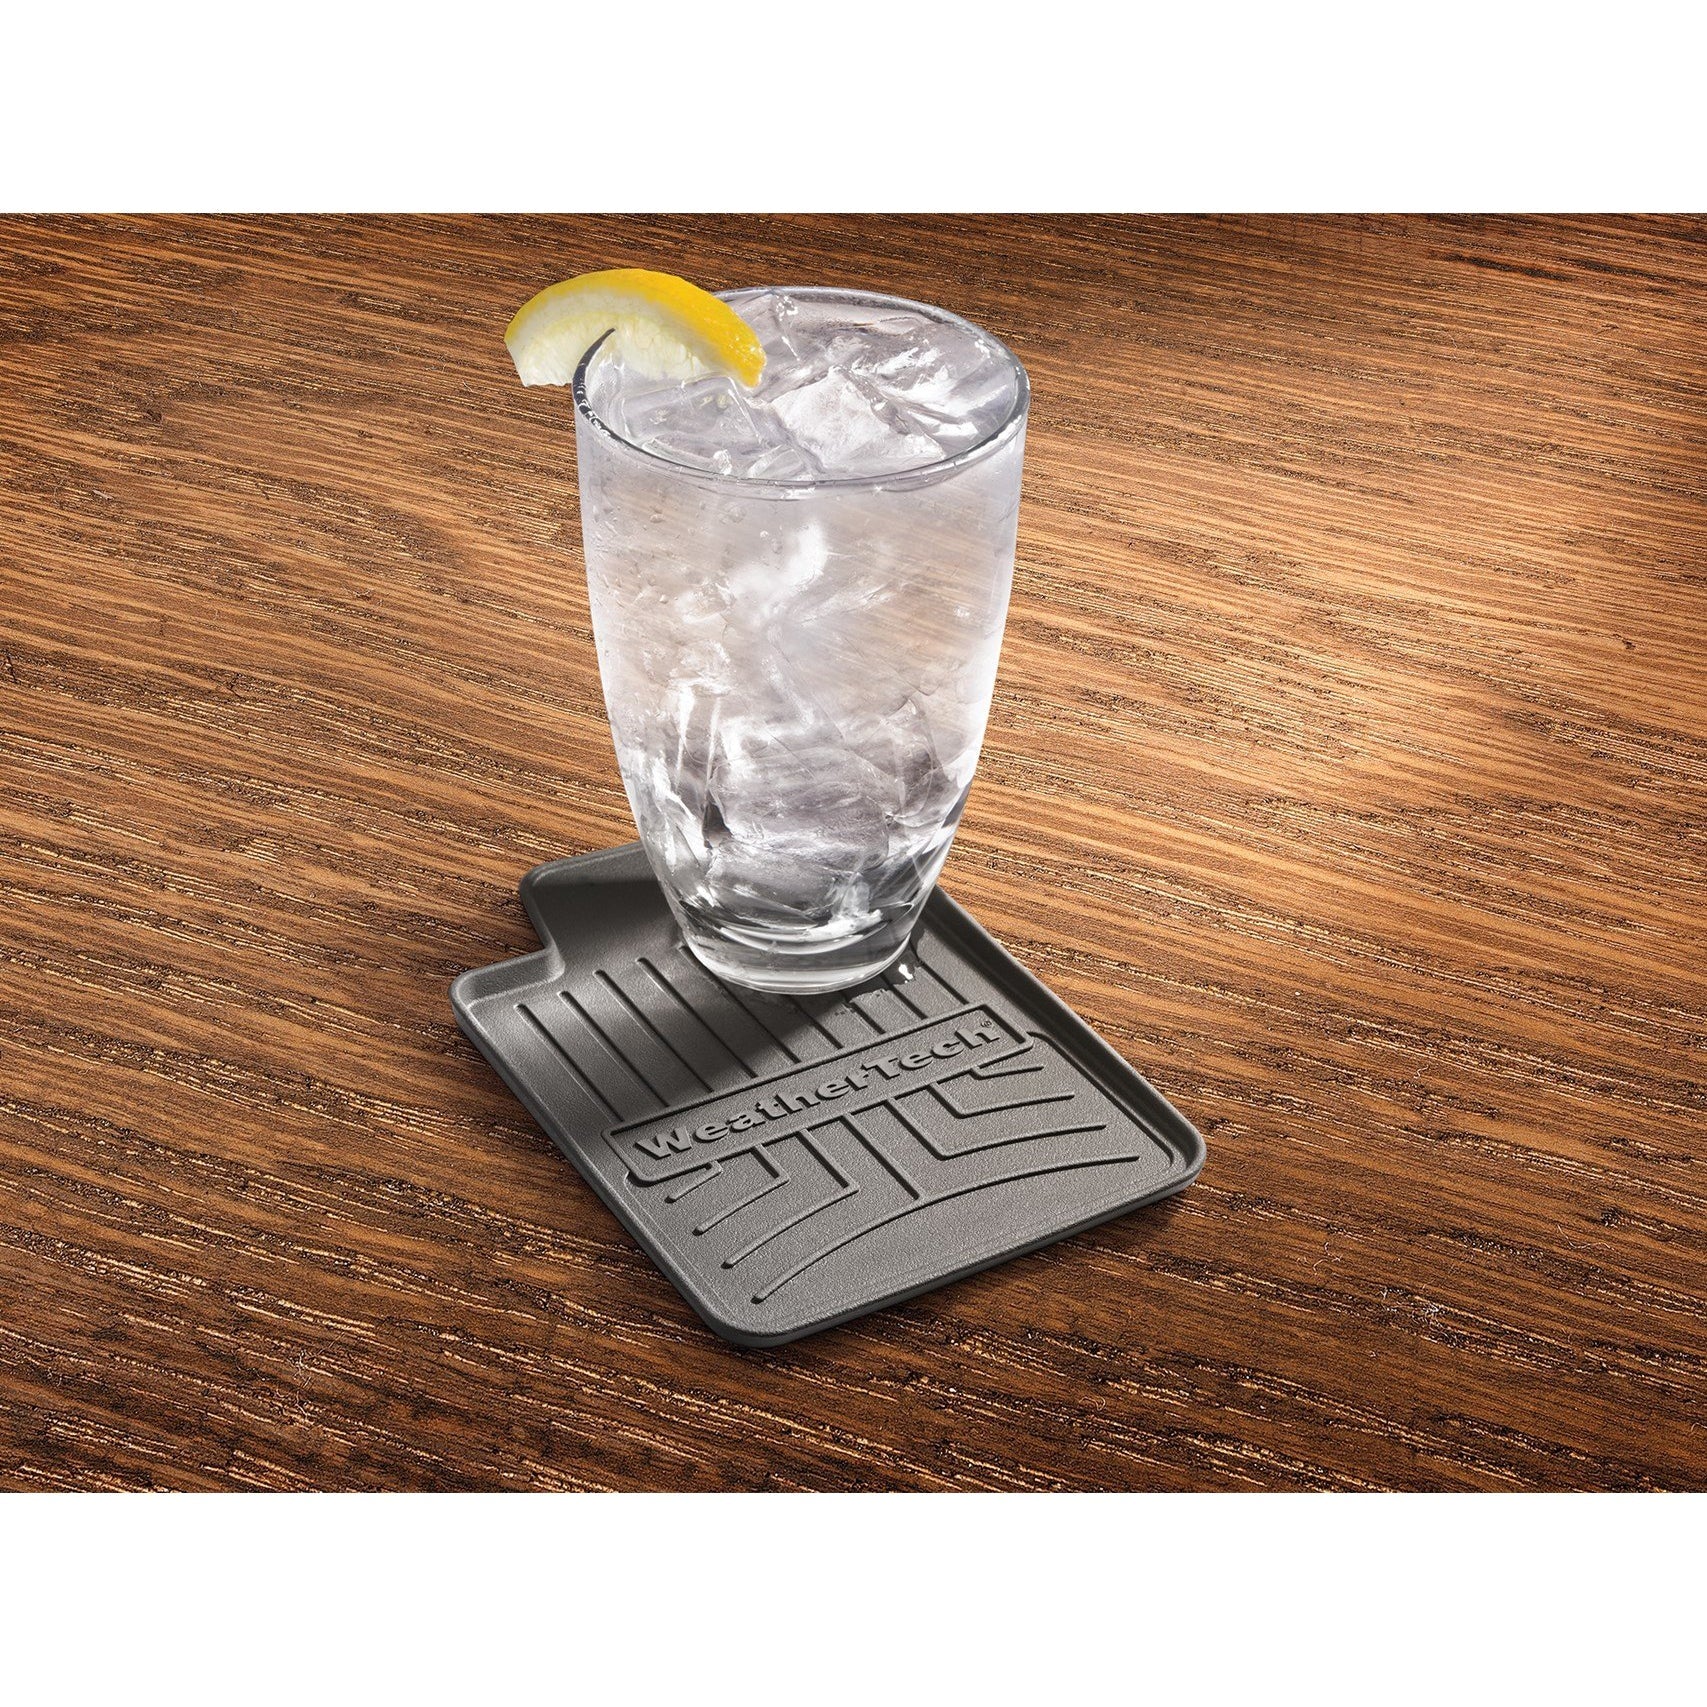 WeatherTech FloorLiner Drink Coasters (4-Pack)